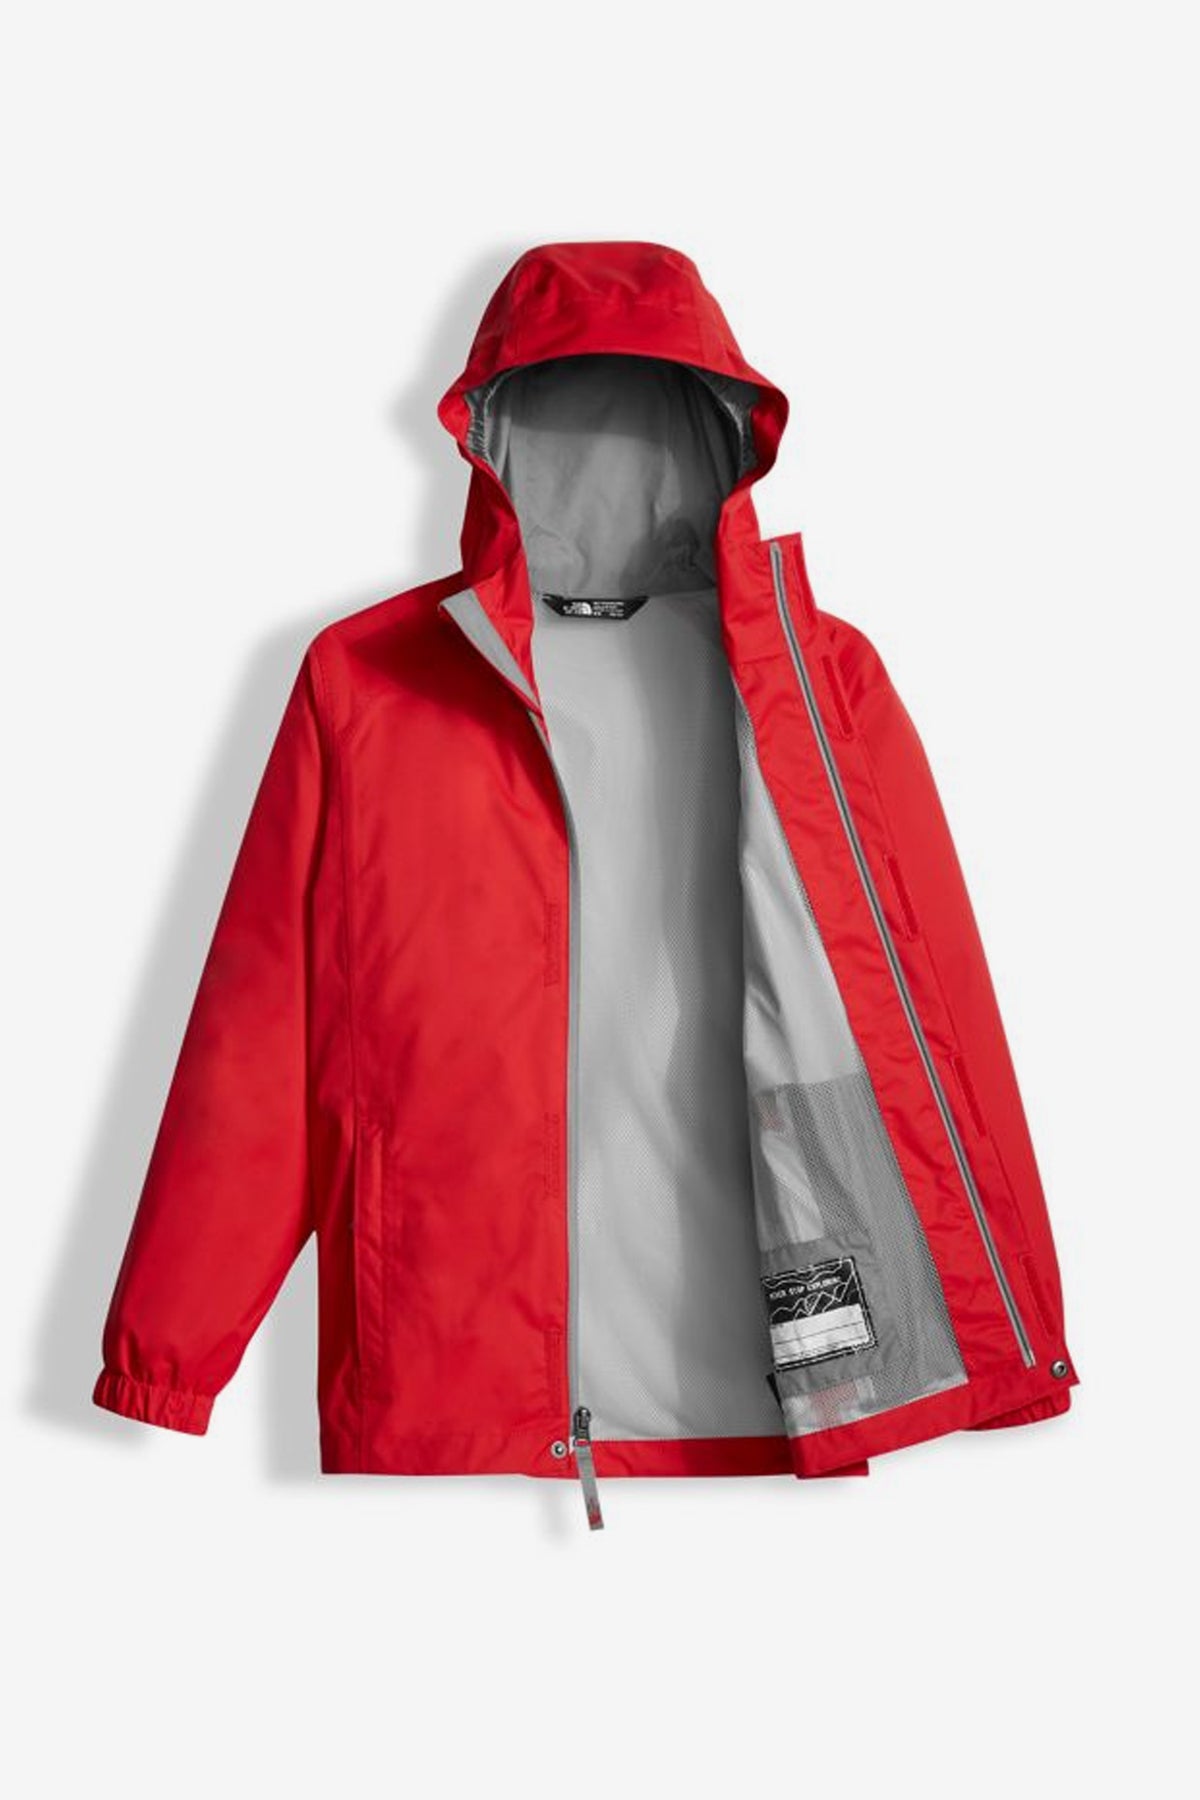 north face rain jacket red